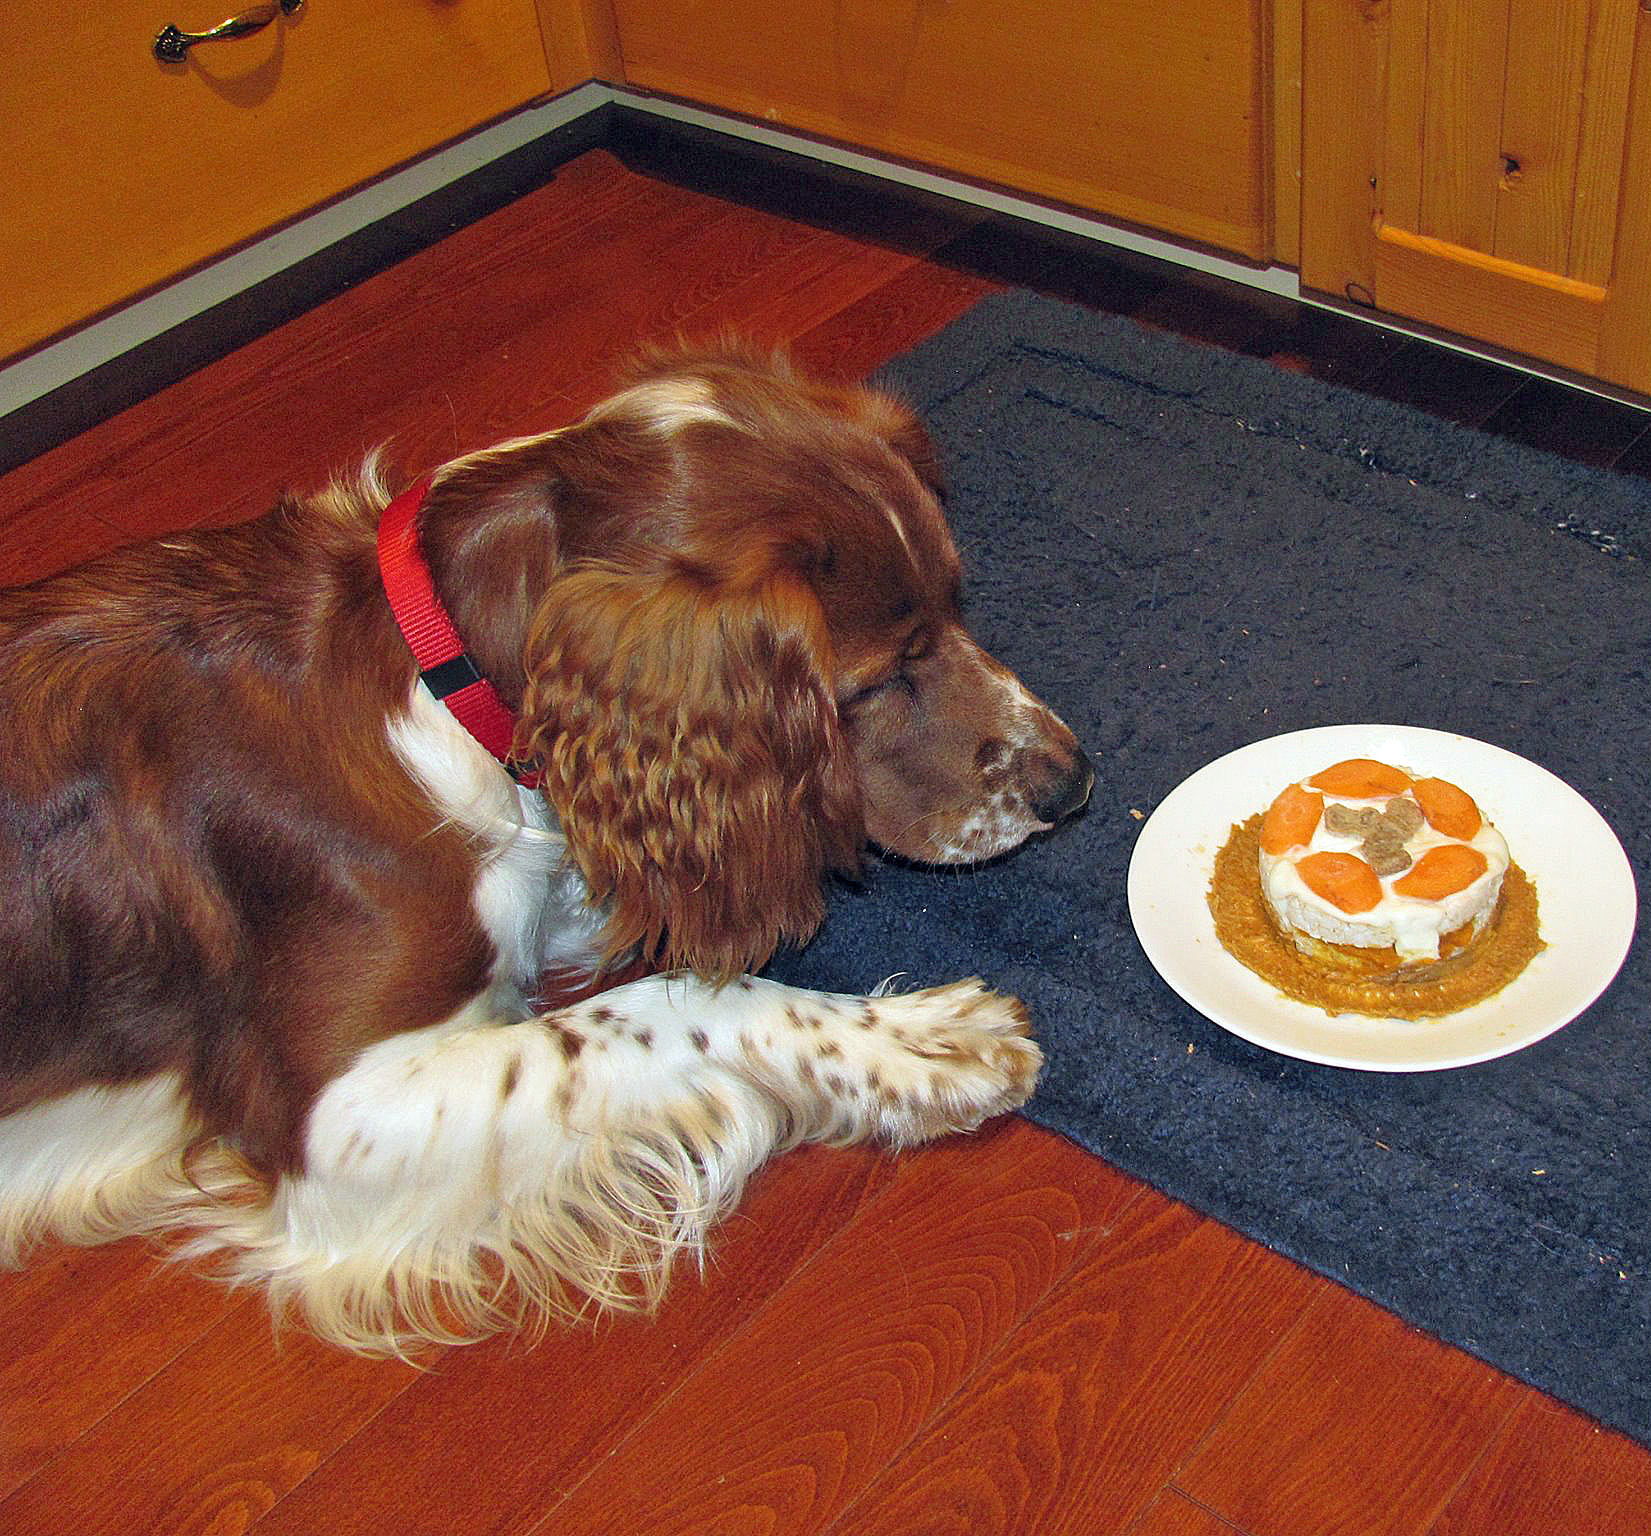 Watson - looking at his birthday cake